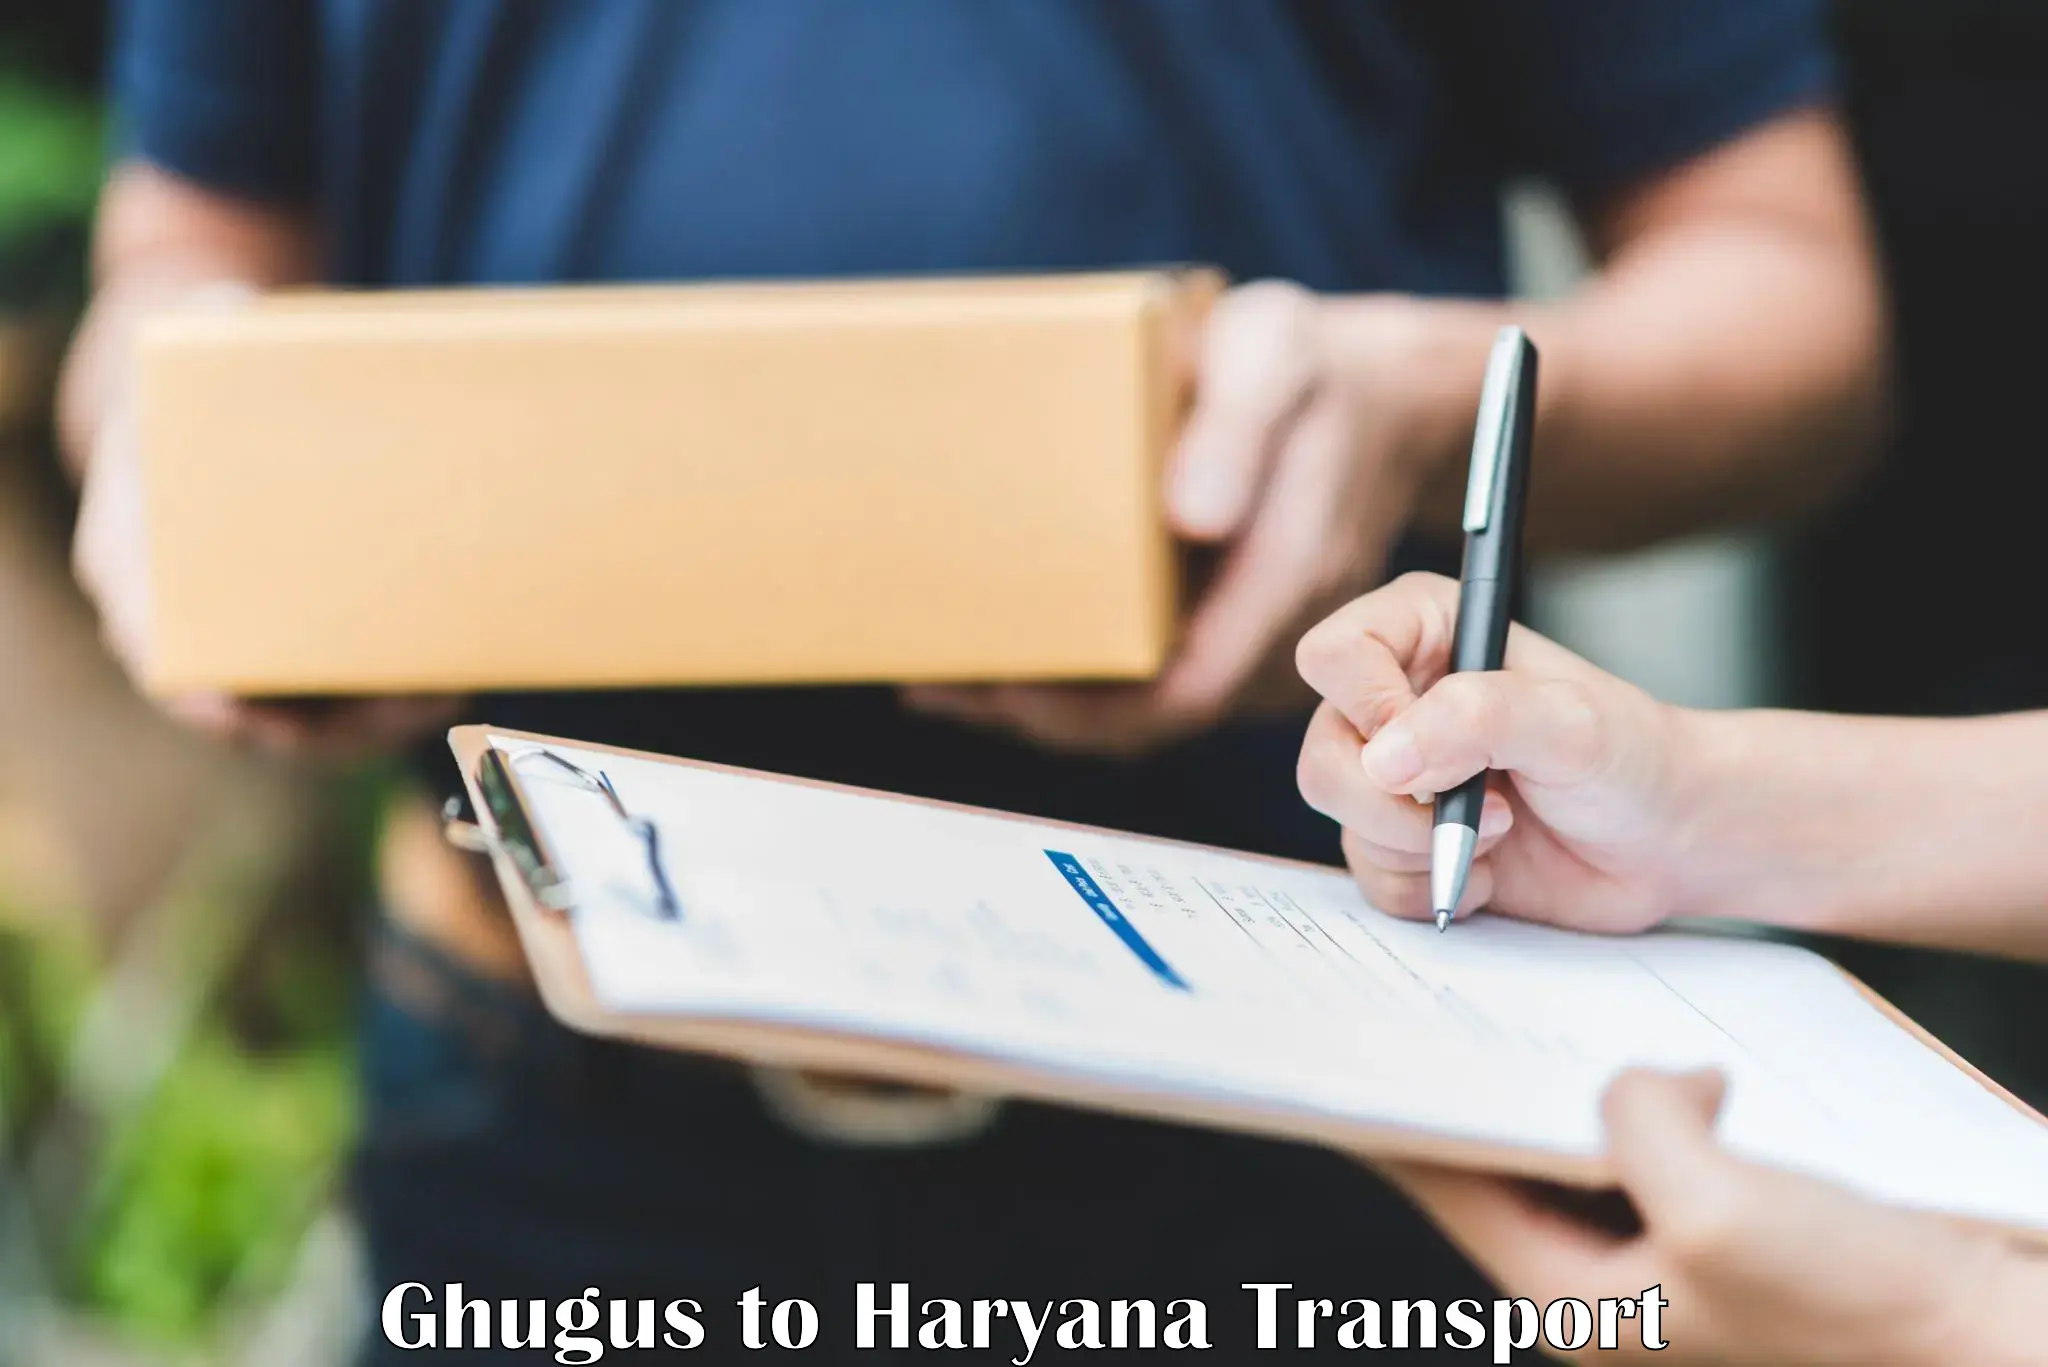 Bike transport service Ghugus to Hansi